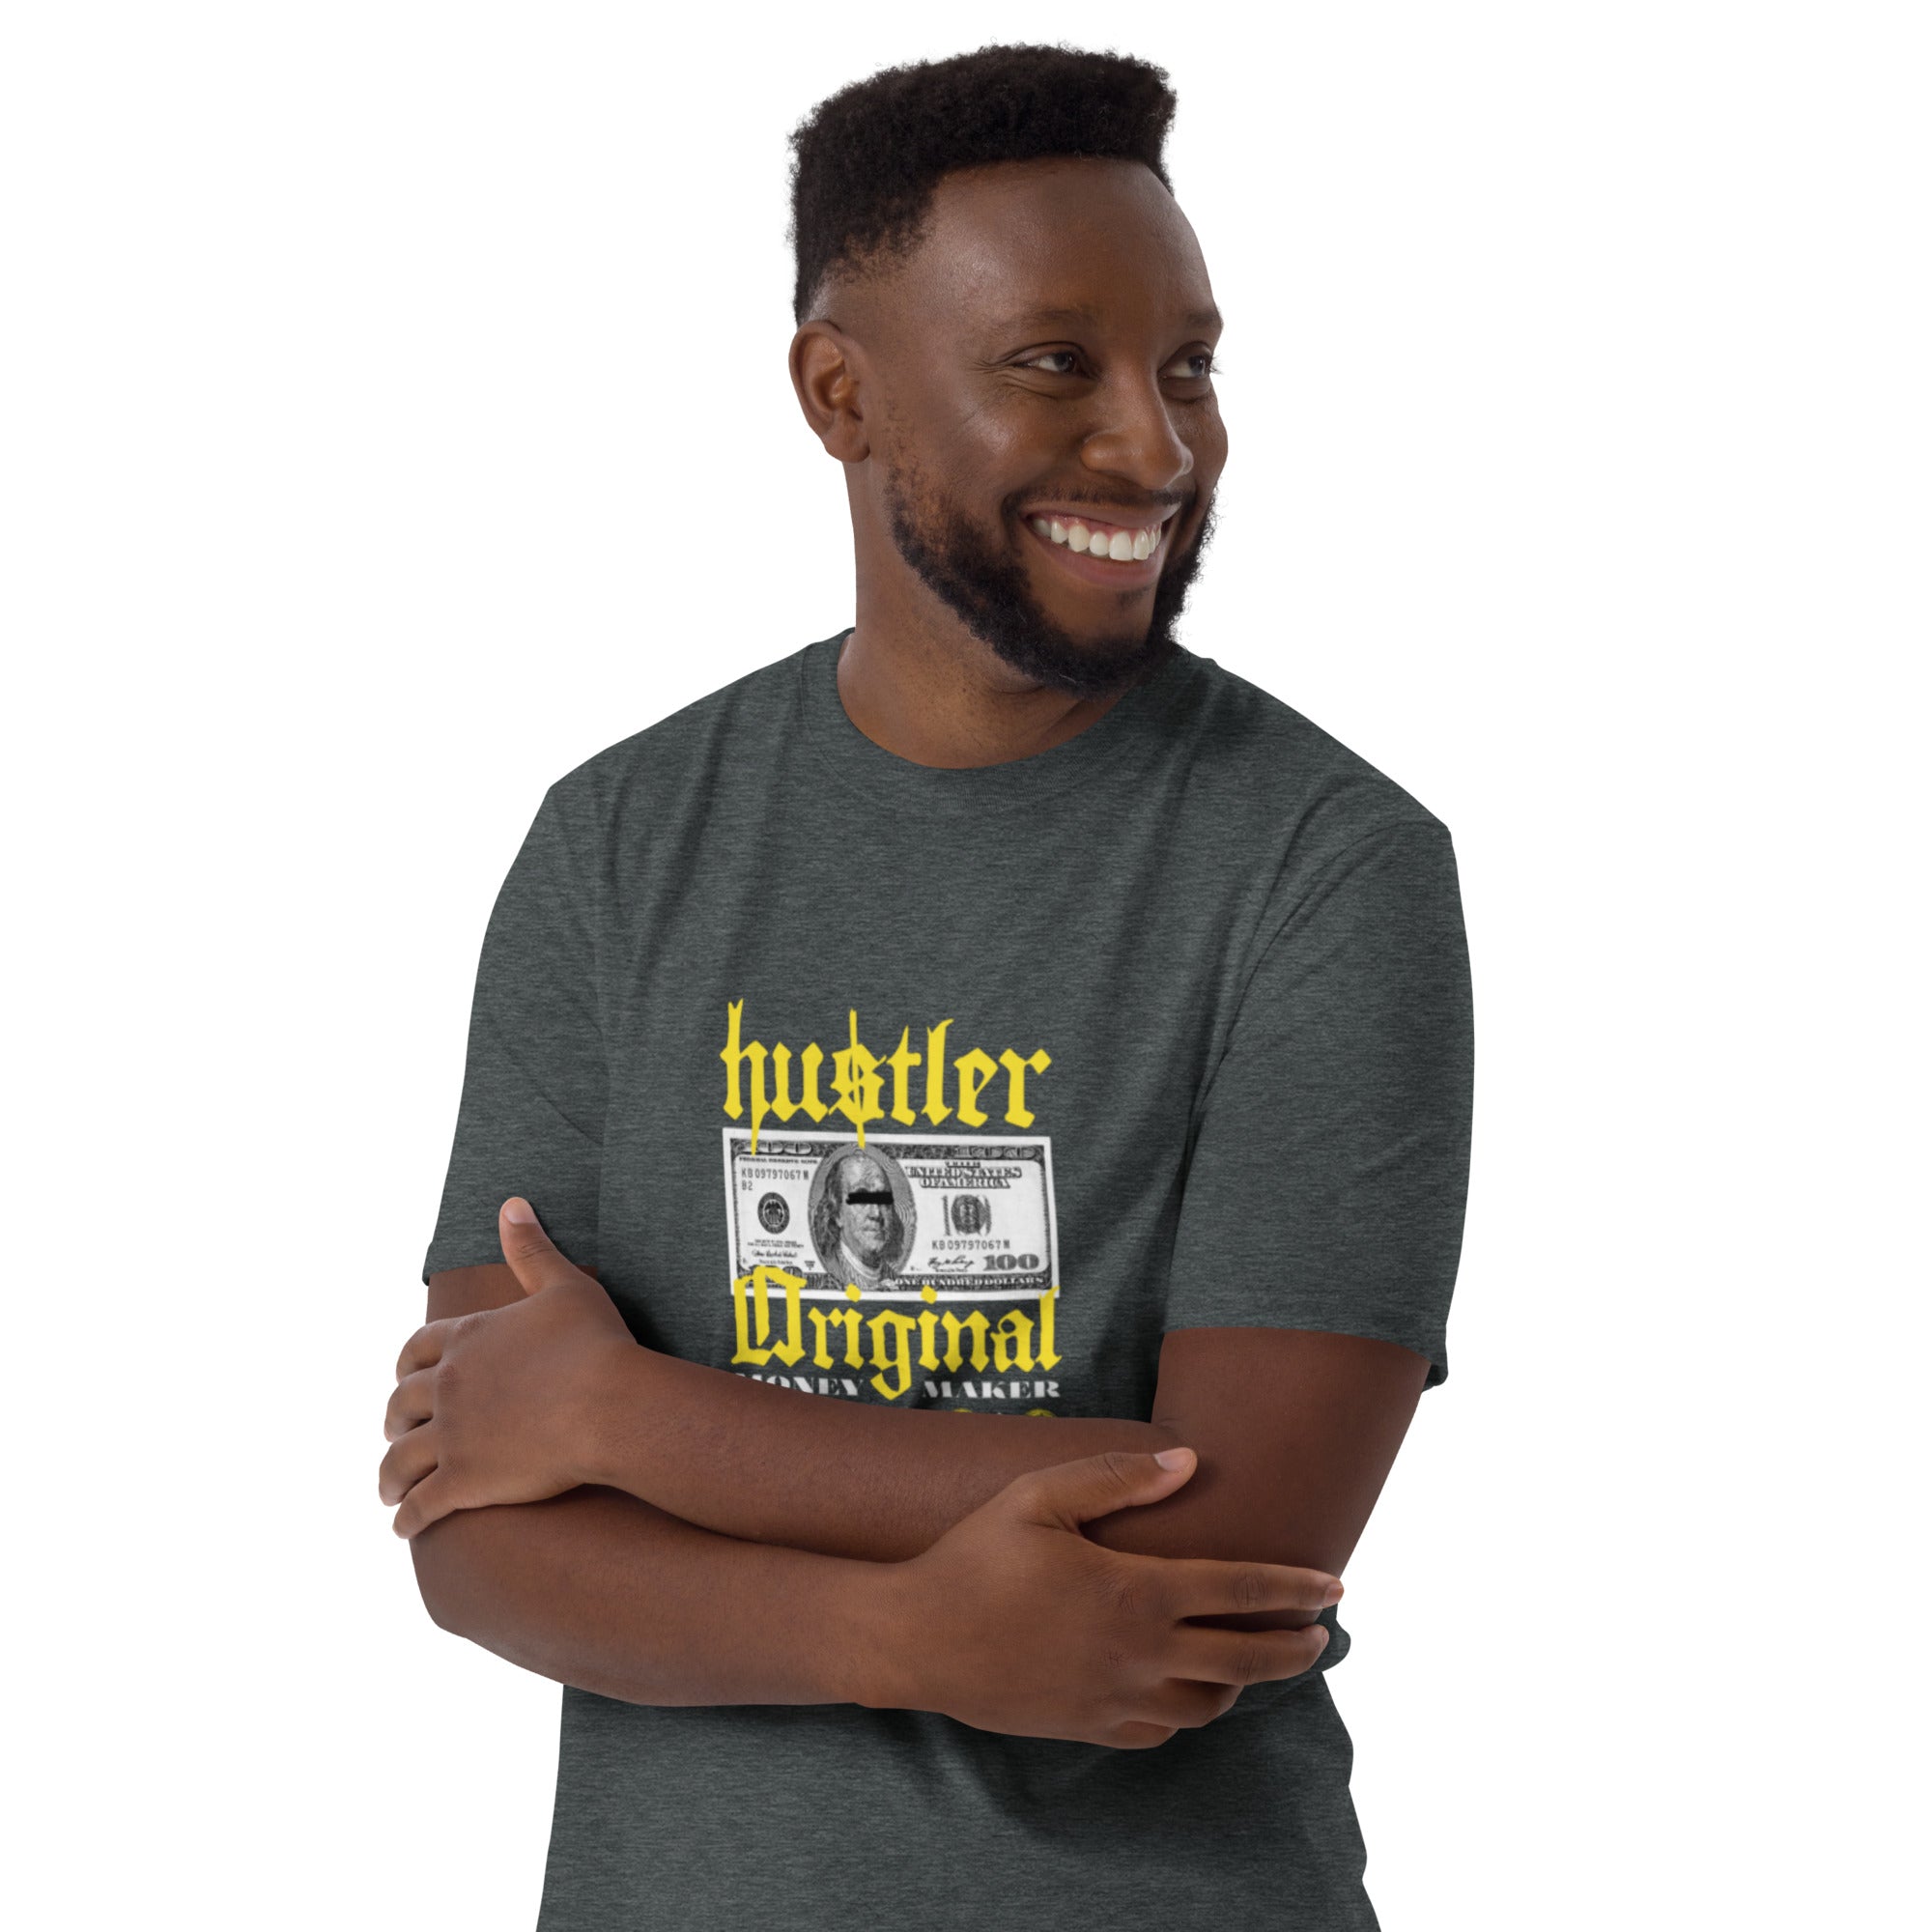 Hustler Original Short-Sleeve Unisex T-Shirt